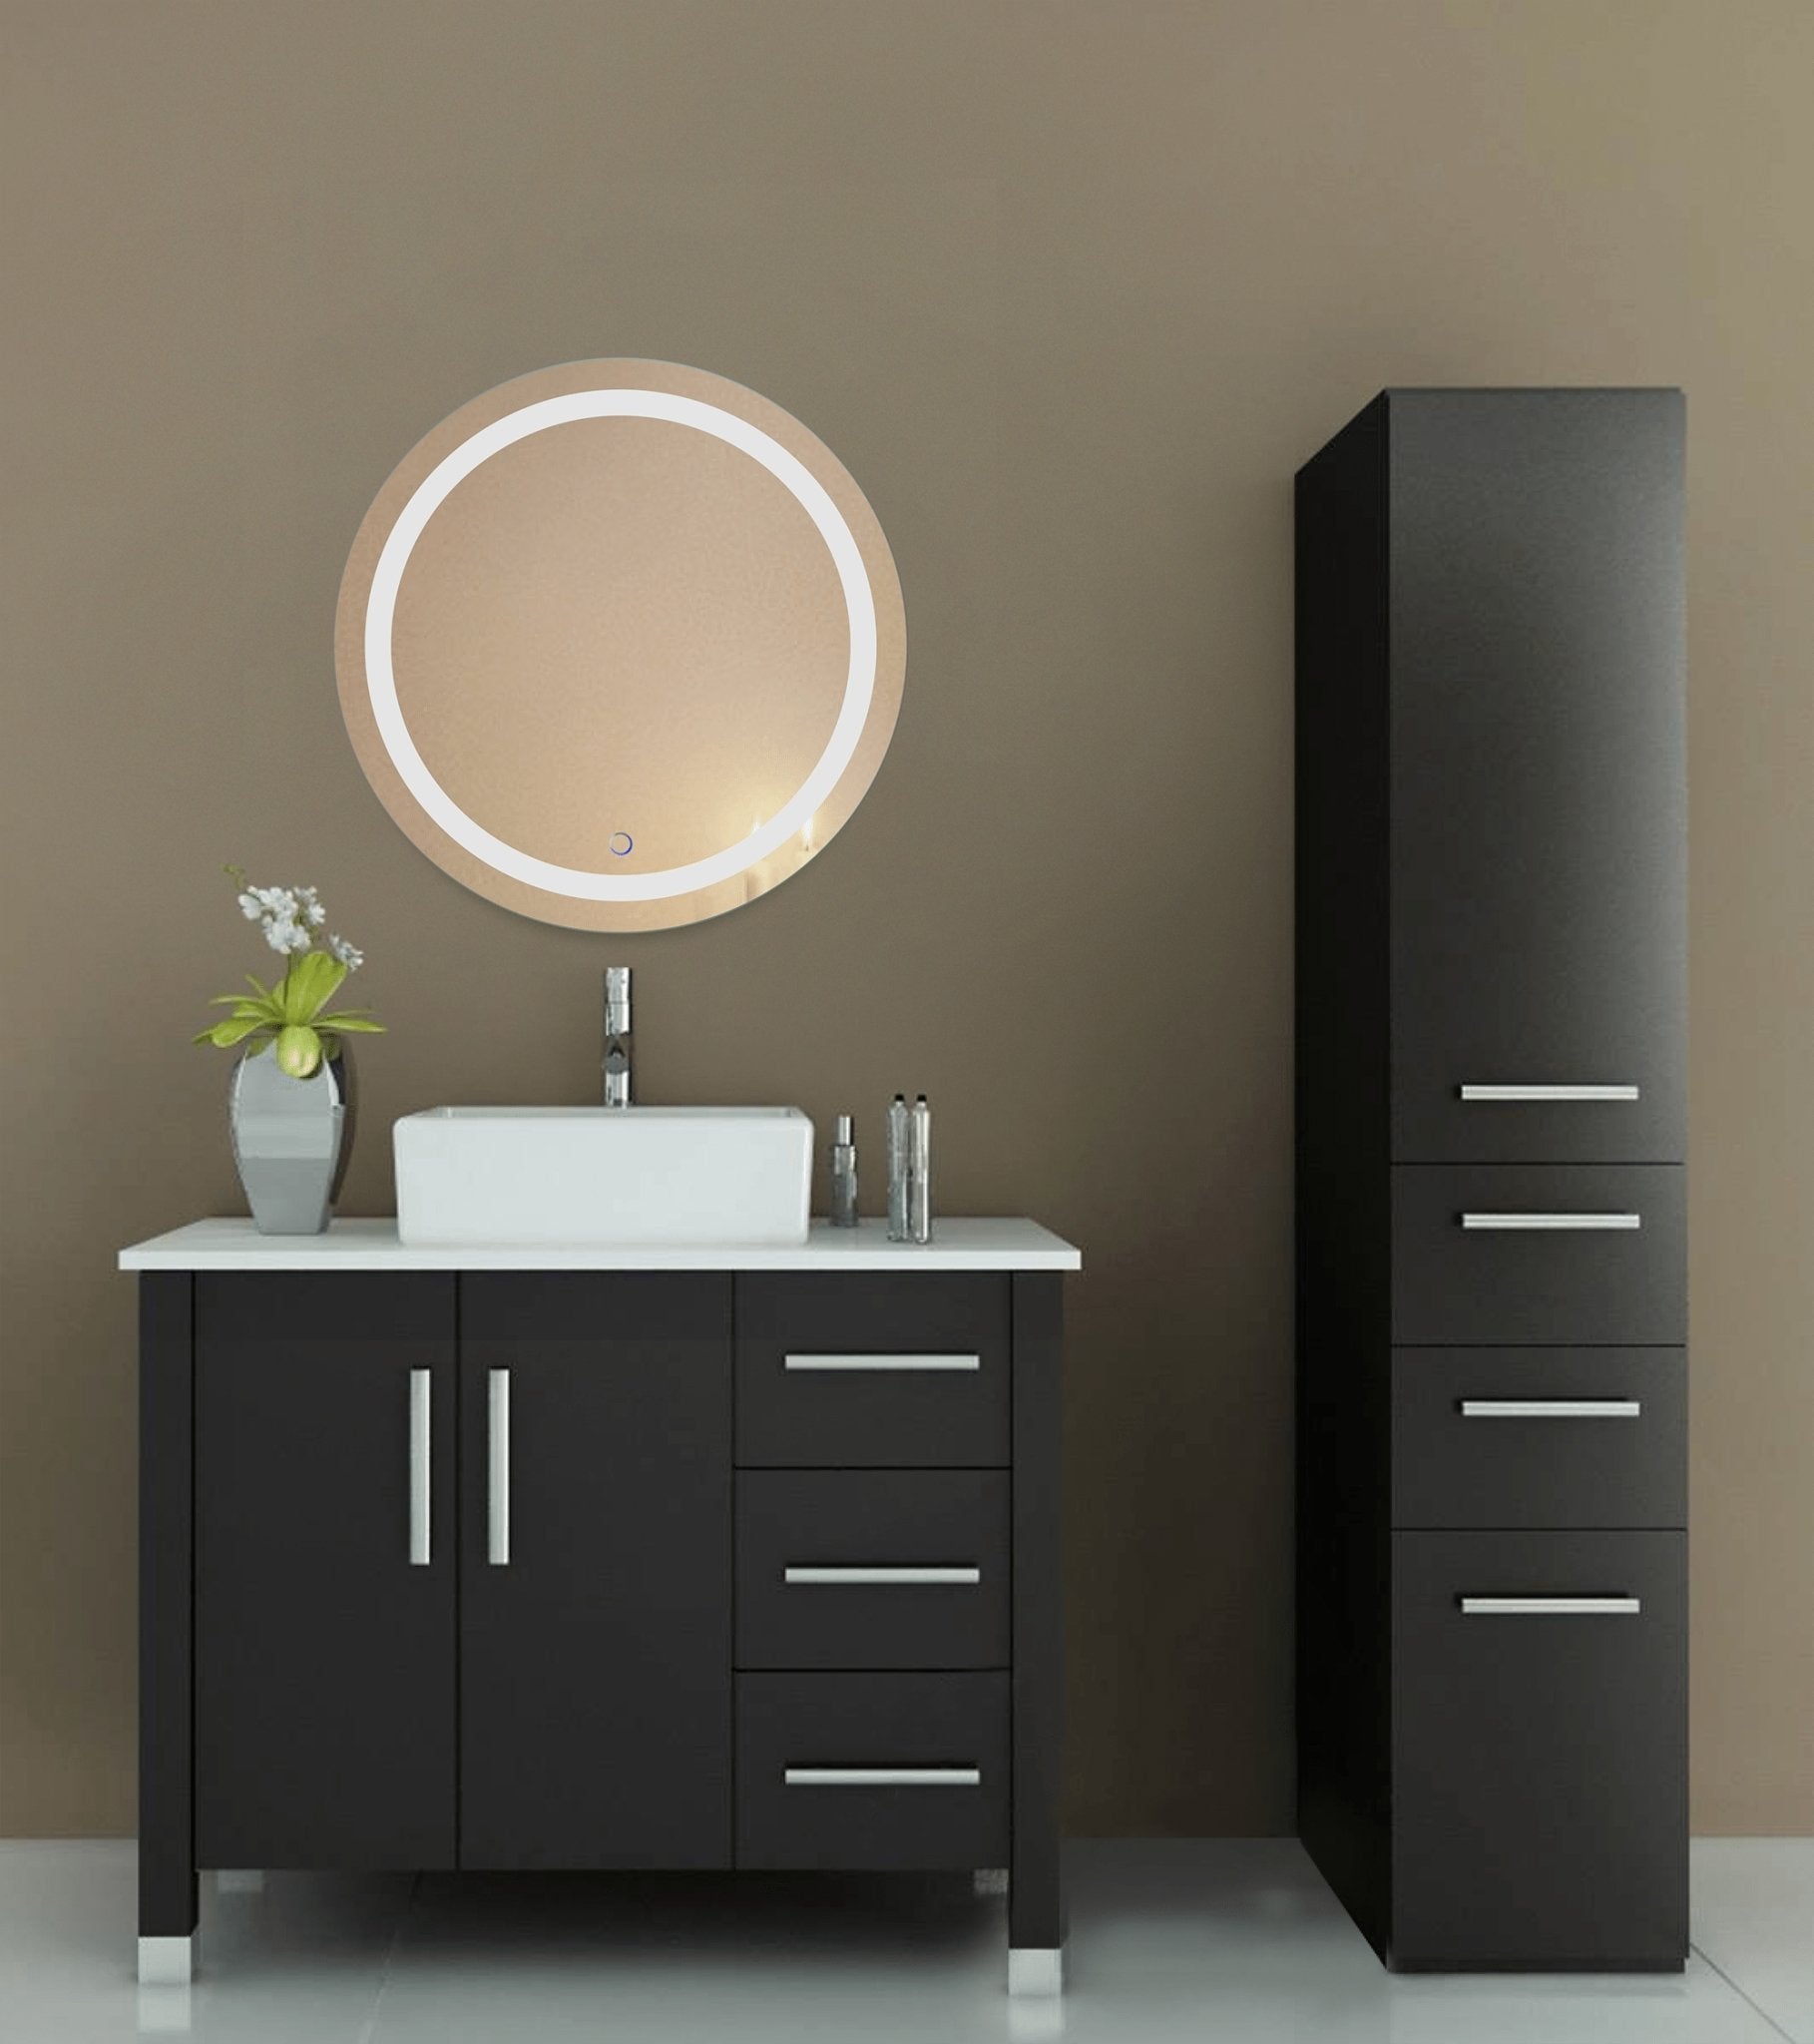 Icon Round 24" x 24" LED Bathroom Mirror w/ Dimmer & Defogger | Round Lighted Vanity Mirror - Molaix - Molaix853962007286Lighted Wall Mirror,RoundICON2424R